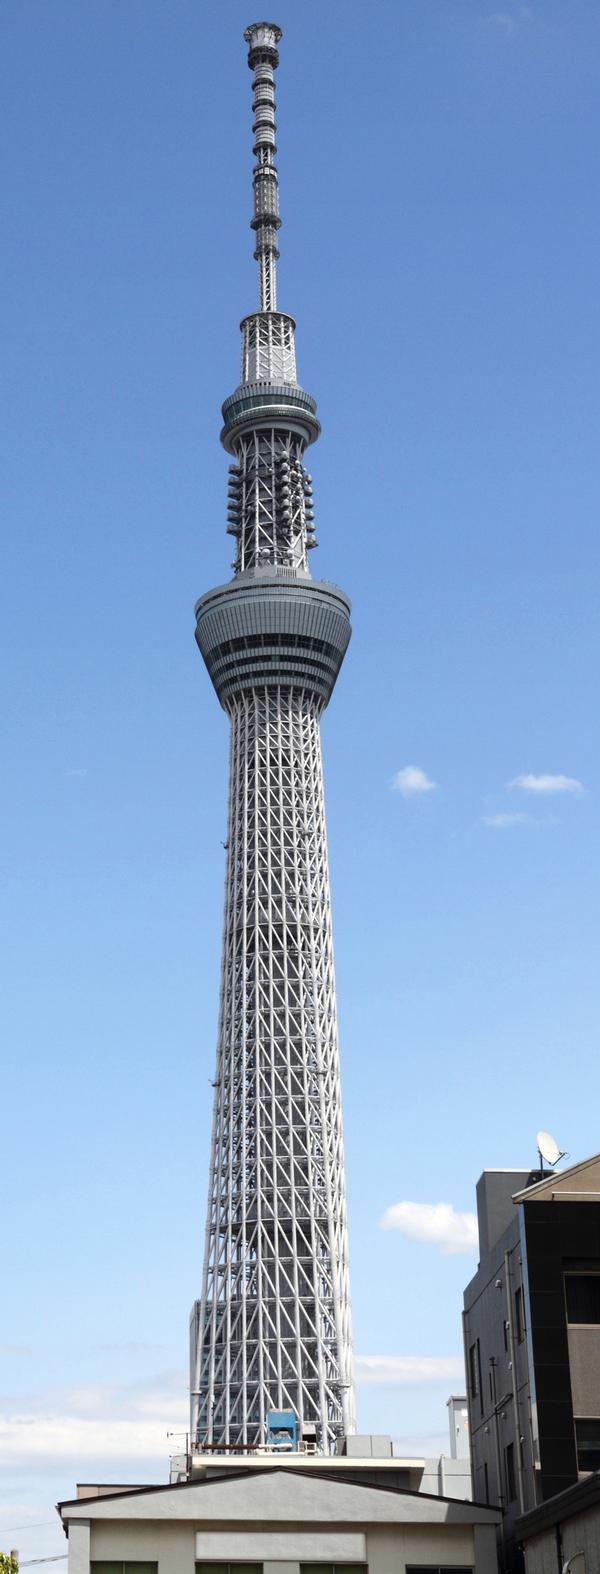 Tokyo Skytree’s tallest of four observation deck is 451.2m-high / Photo: ©www.shutterstock.com/ Videowokart